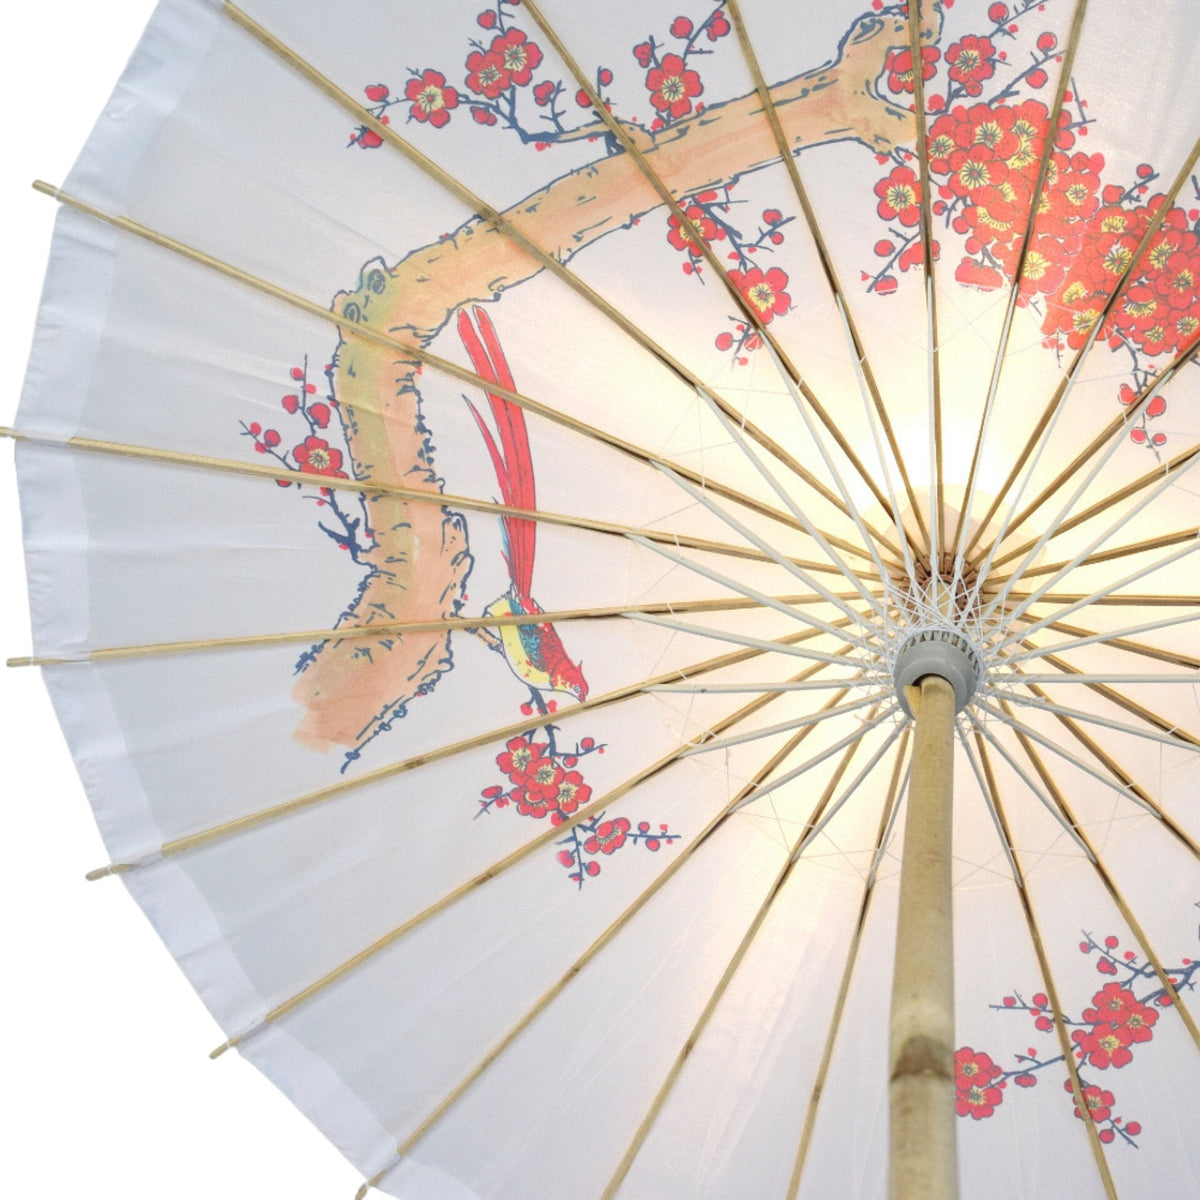 32" Red Bird Cherry Blossom Premium Nylon Parasol Umbrella with Elegant Handle